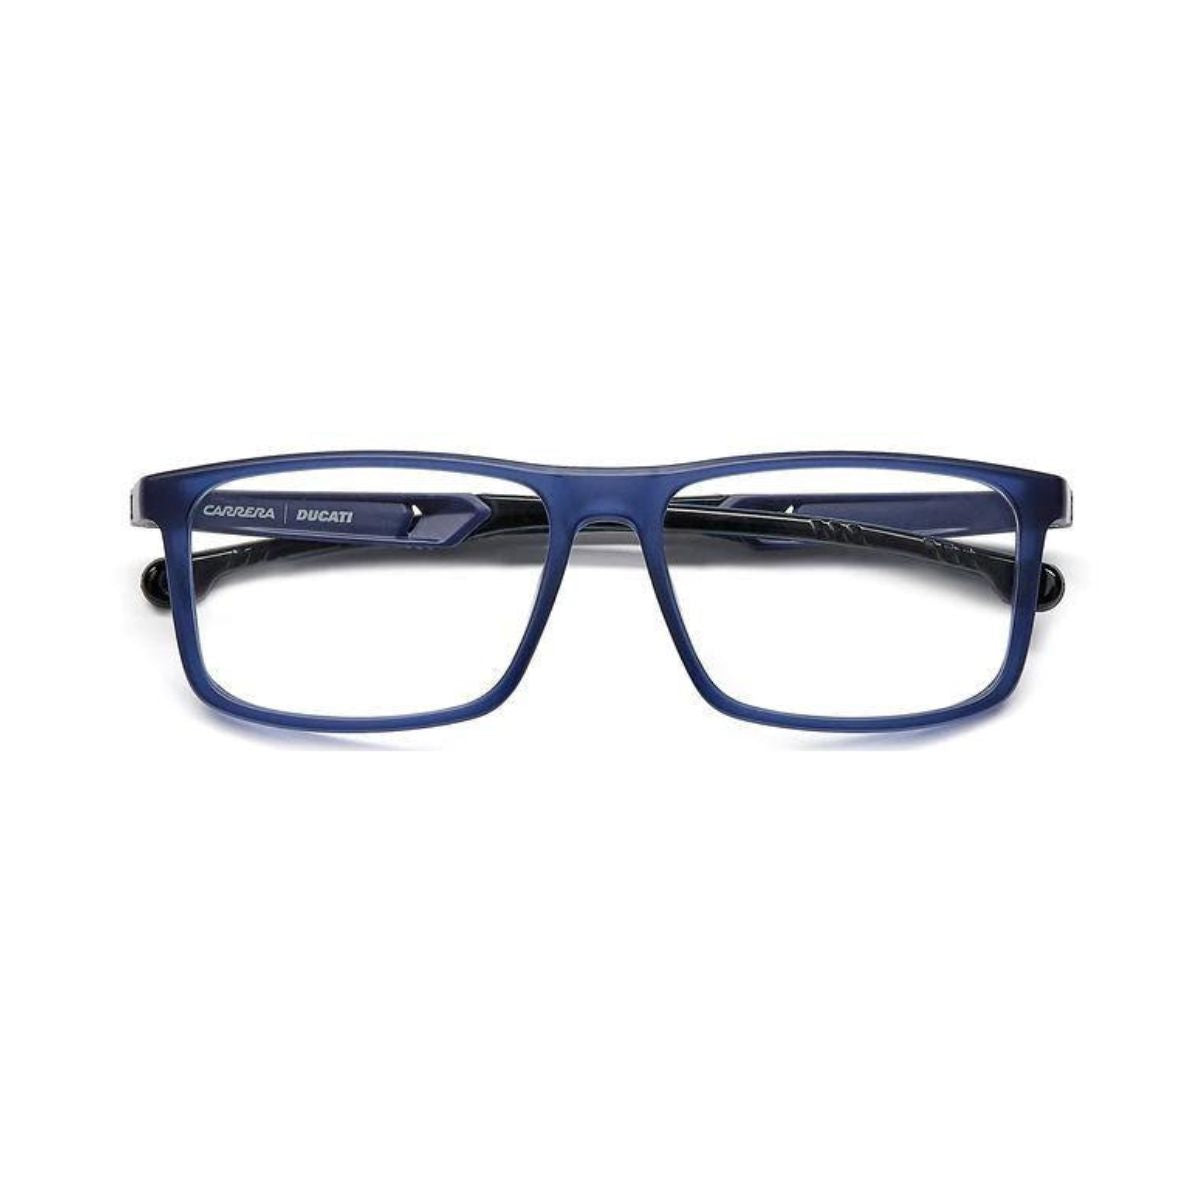 "best Carrera CARDUC 024 FLL prescription eyeglasses frame for men's online at optorium"